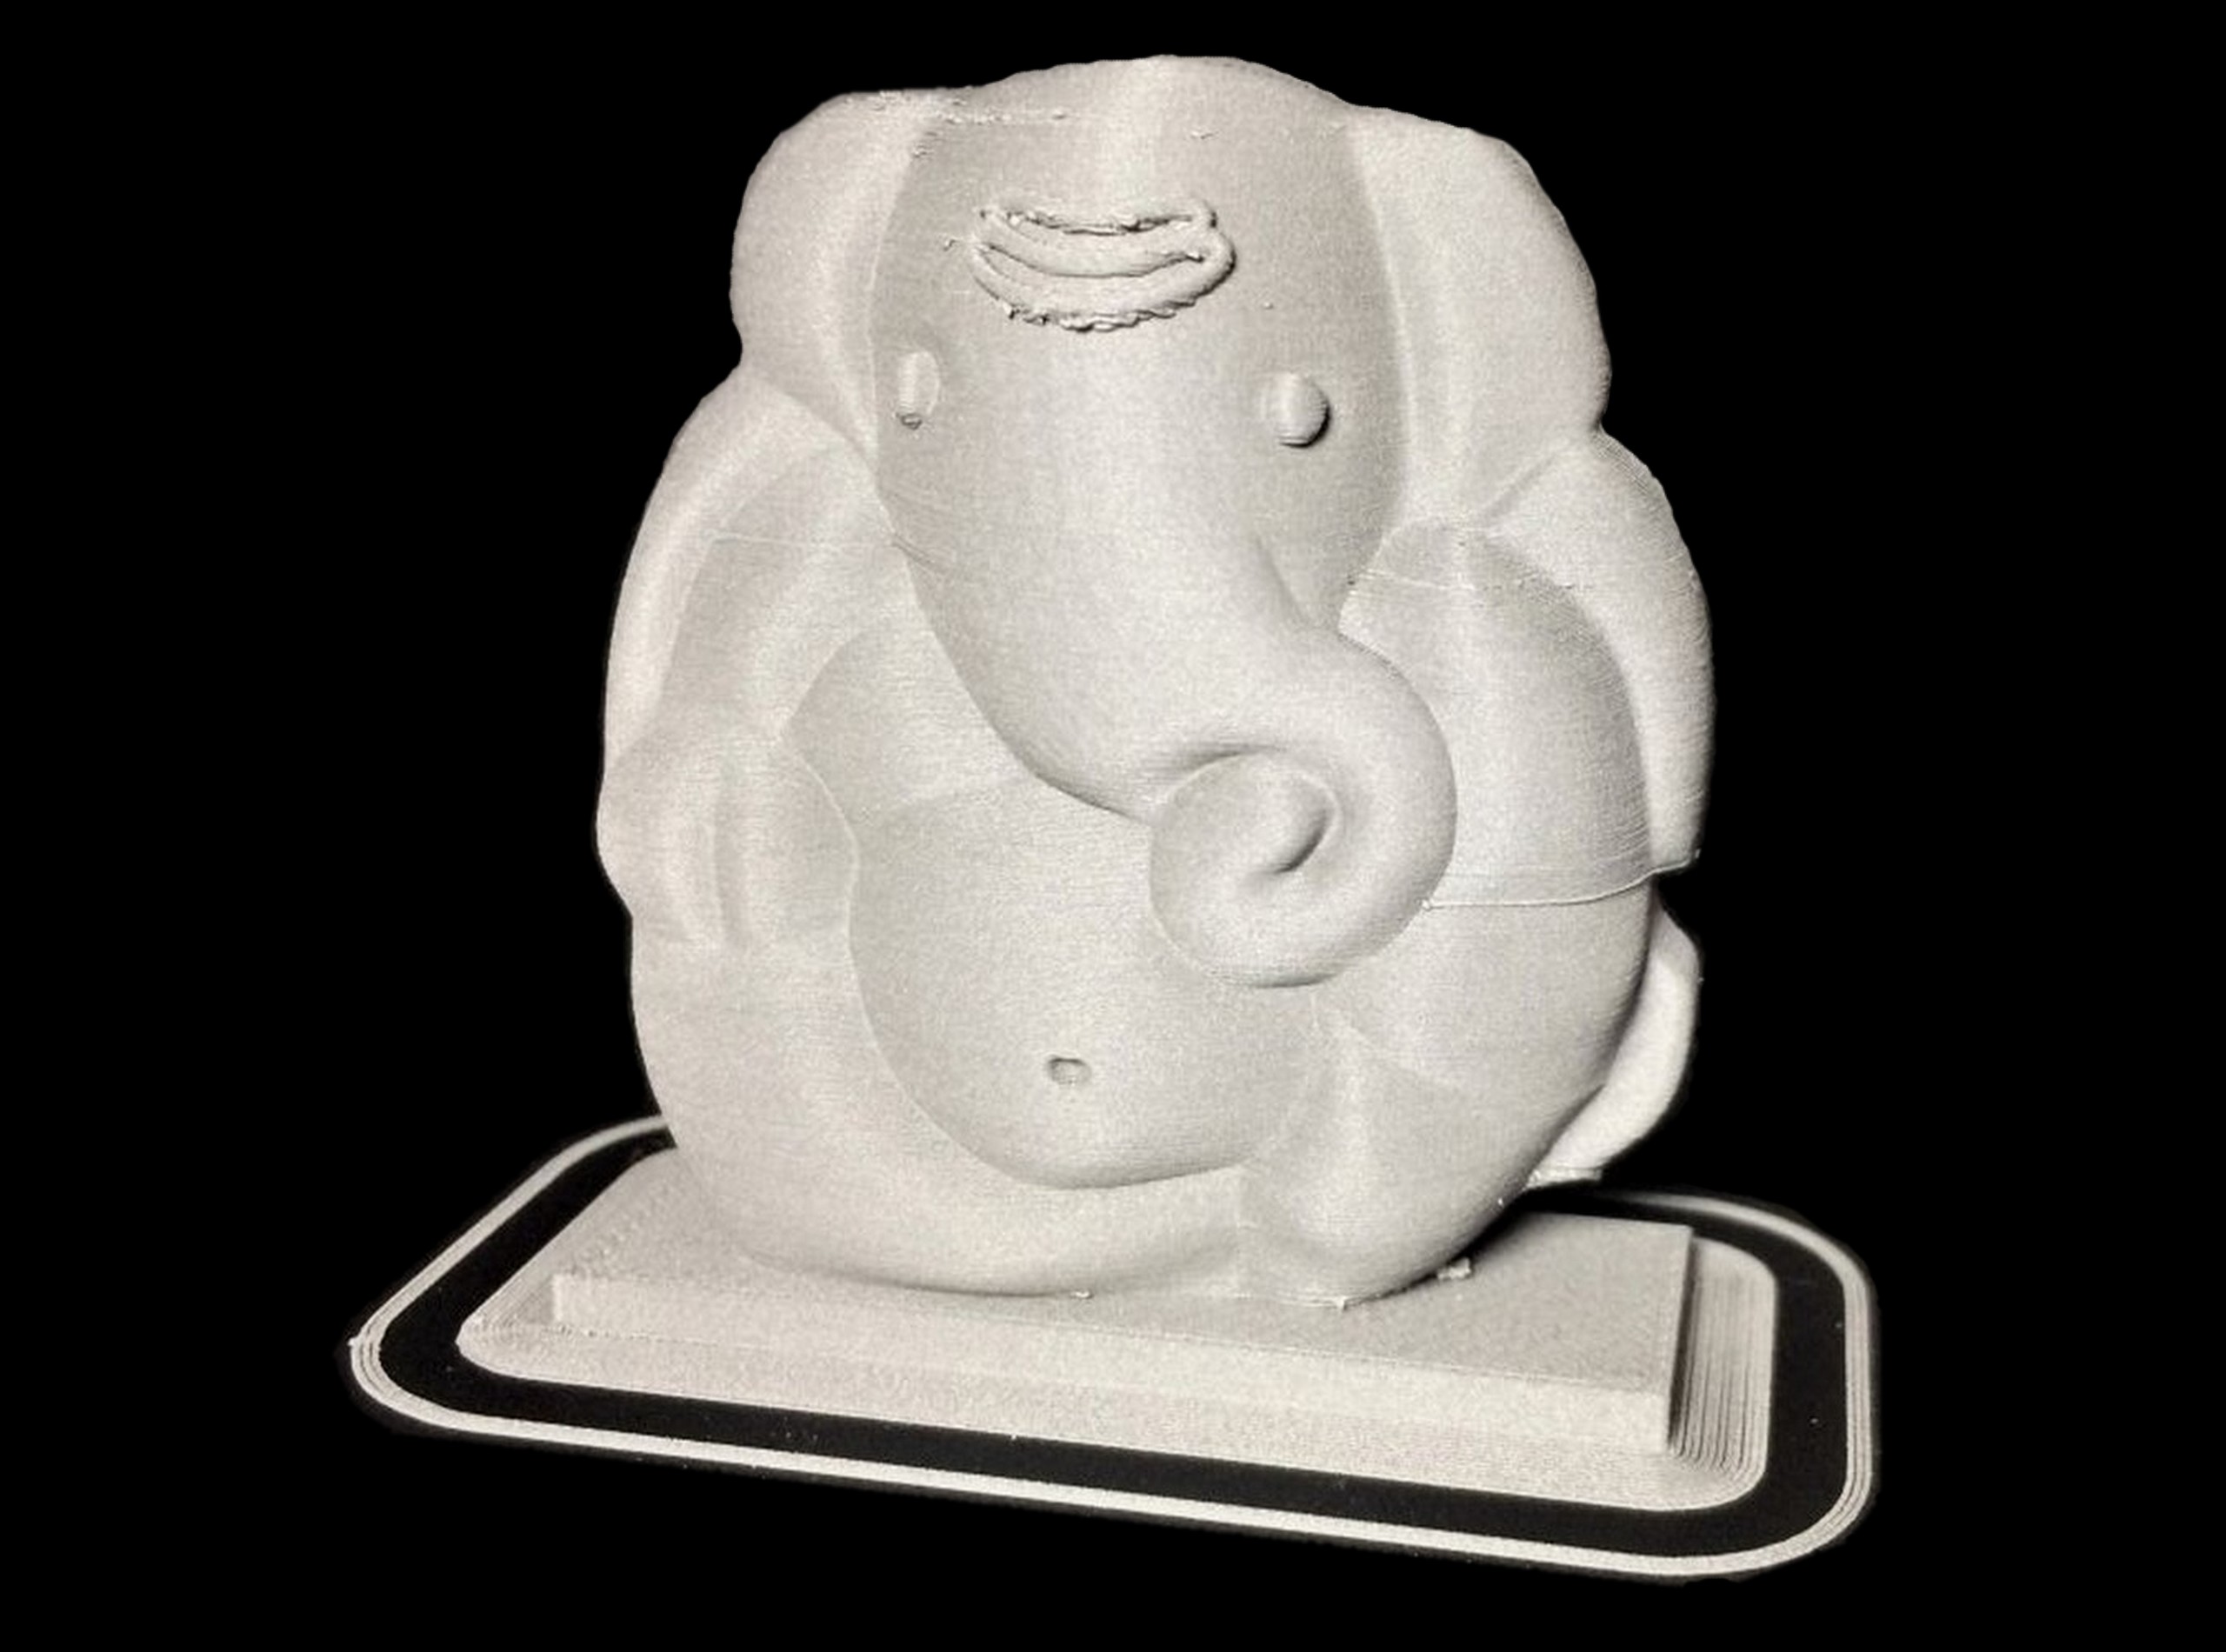 3D printed Ganesha